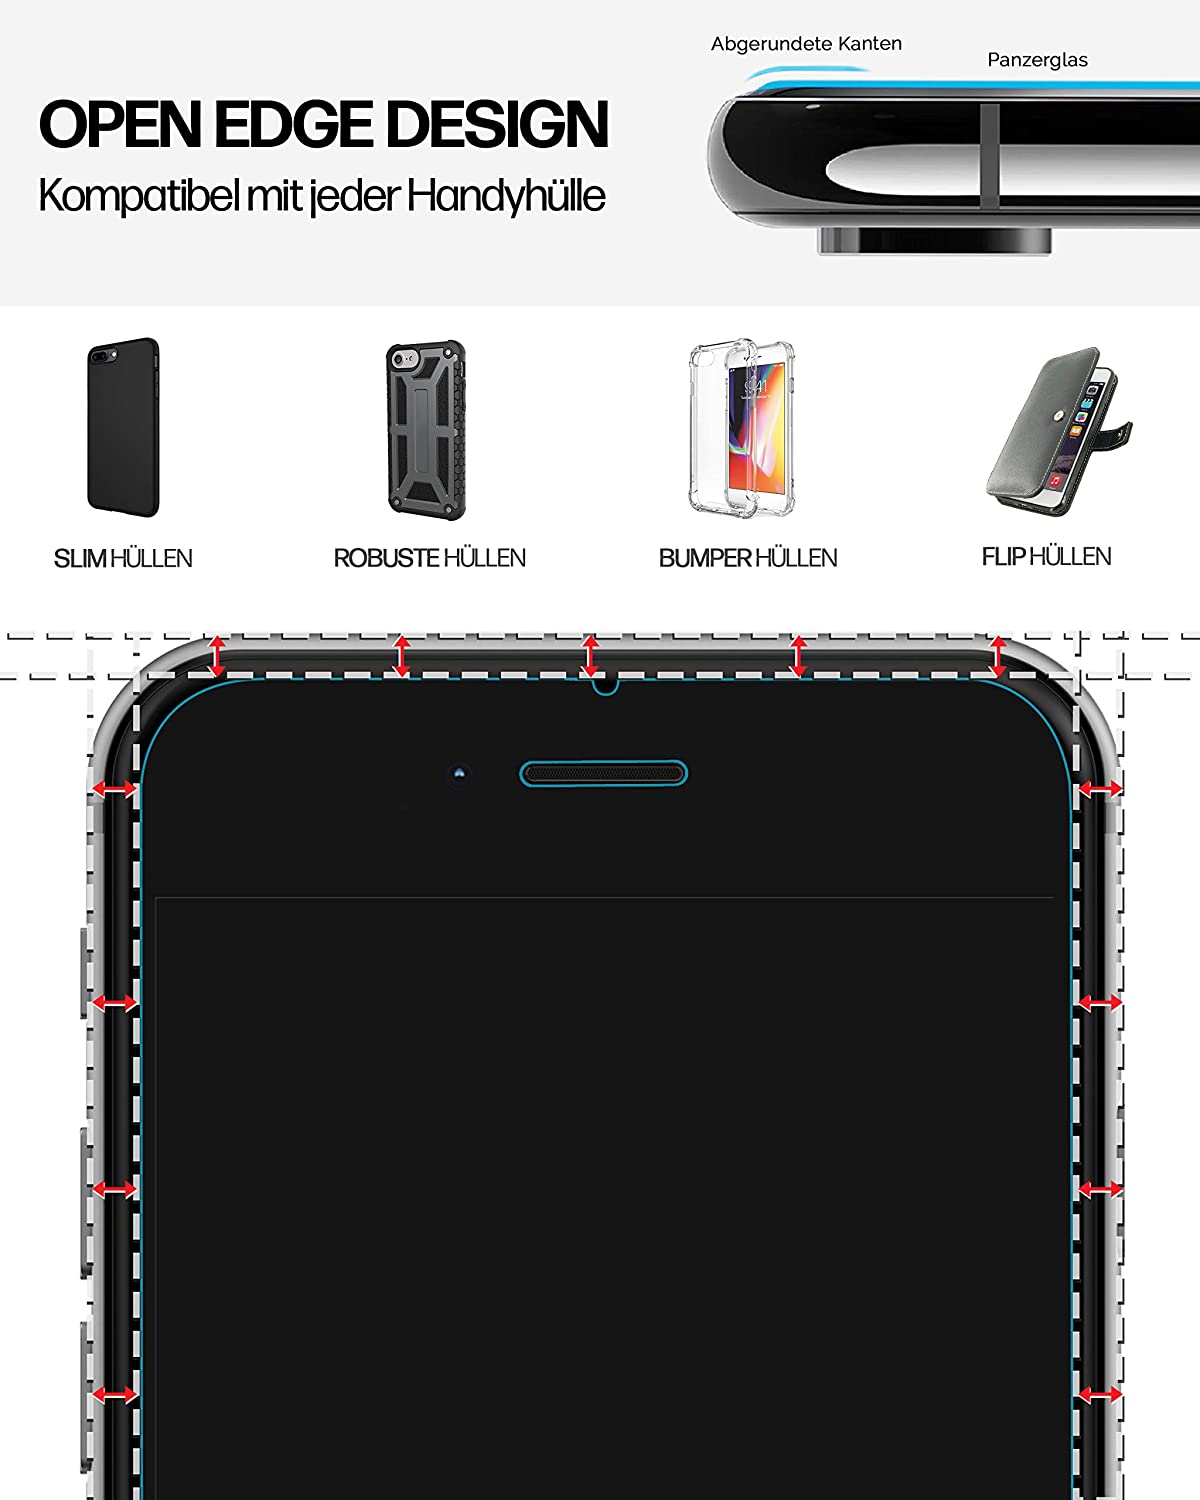 Power Theory Schutzfolie kompatibel mit iPhone 8 Plus & iPhone 7 Plus [2 Stück] Cover